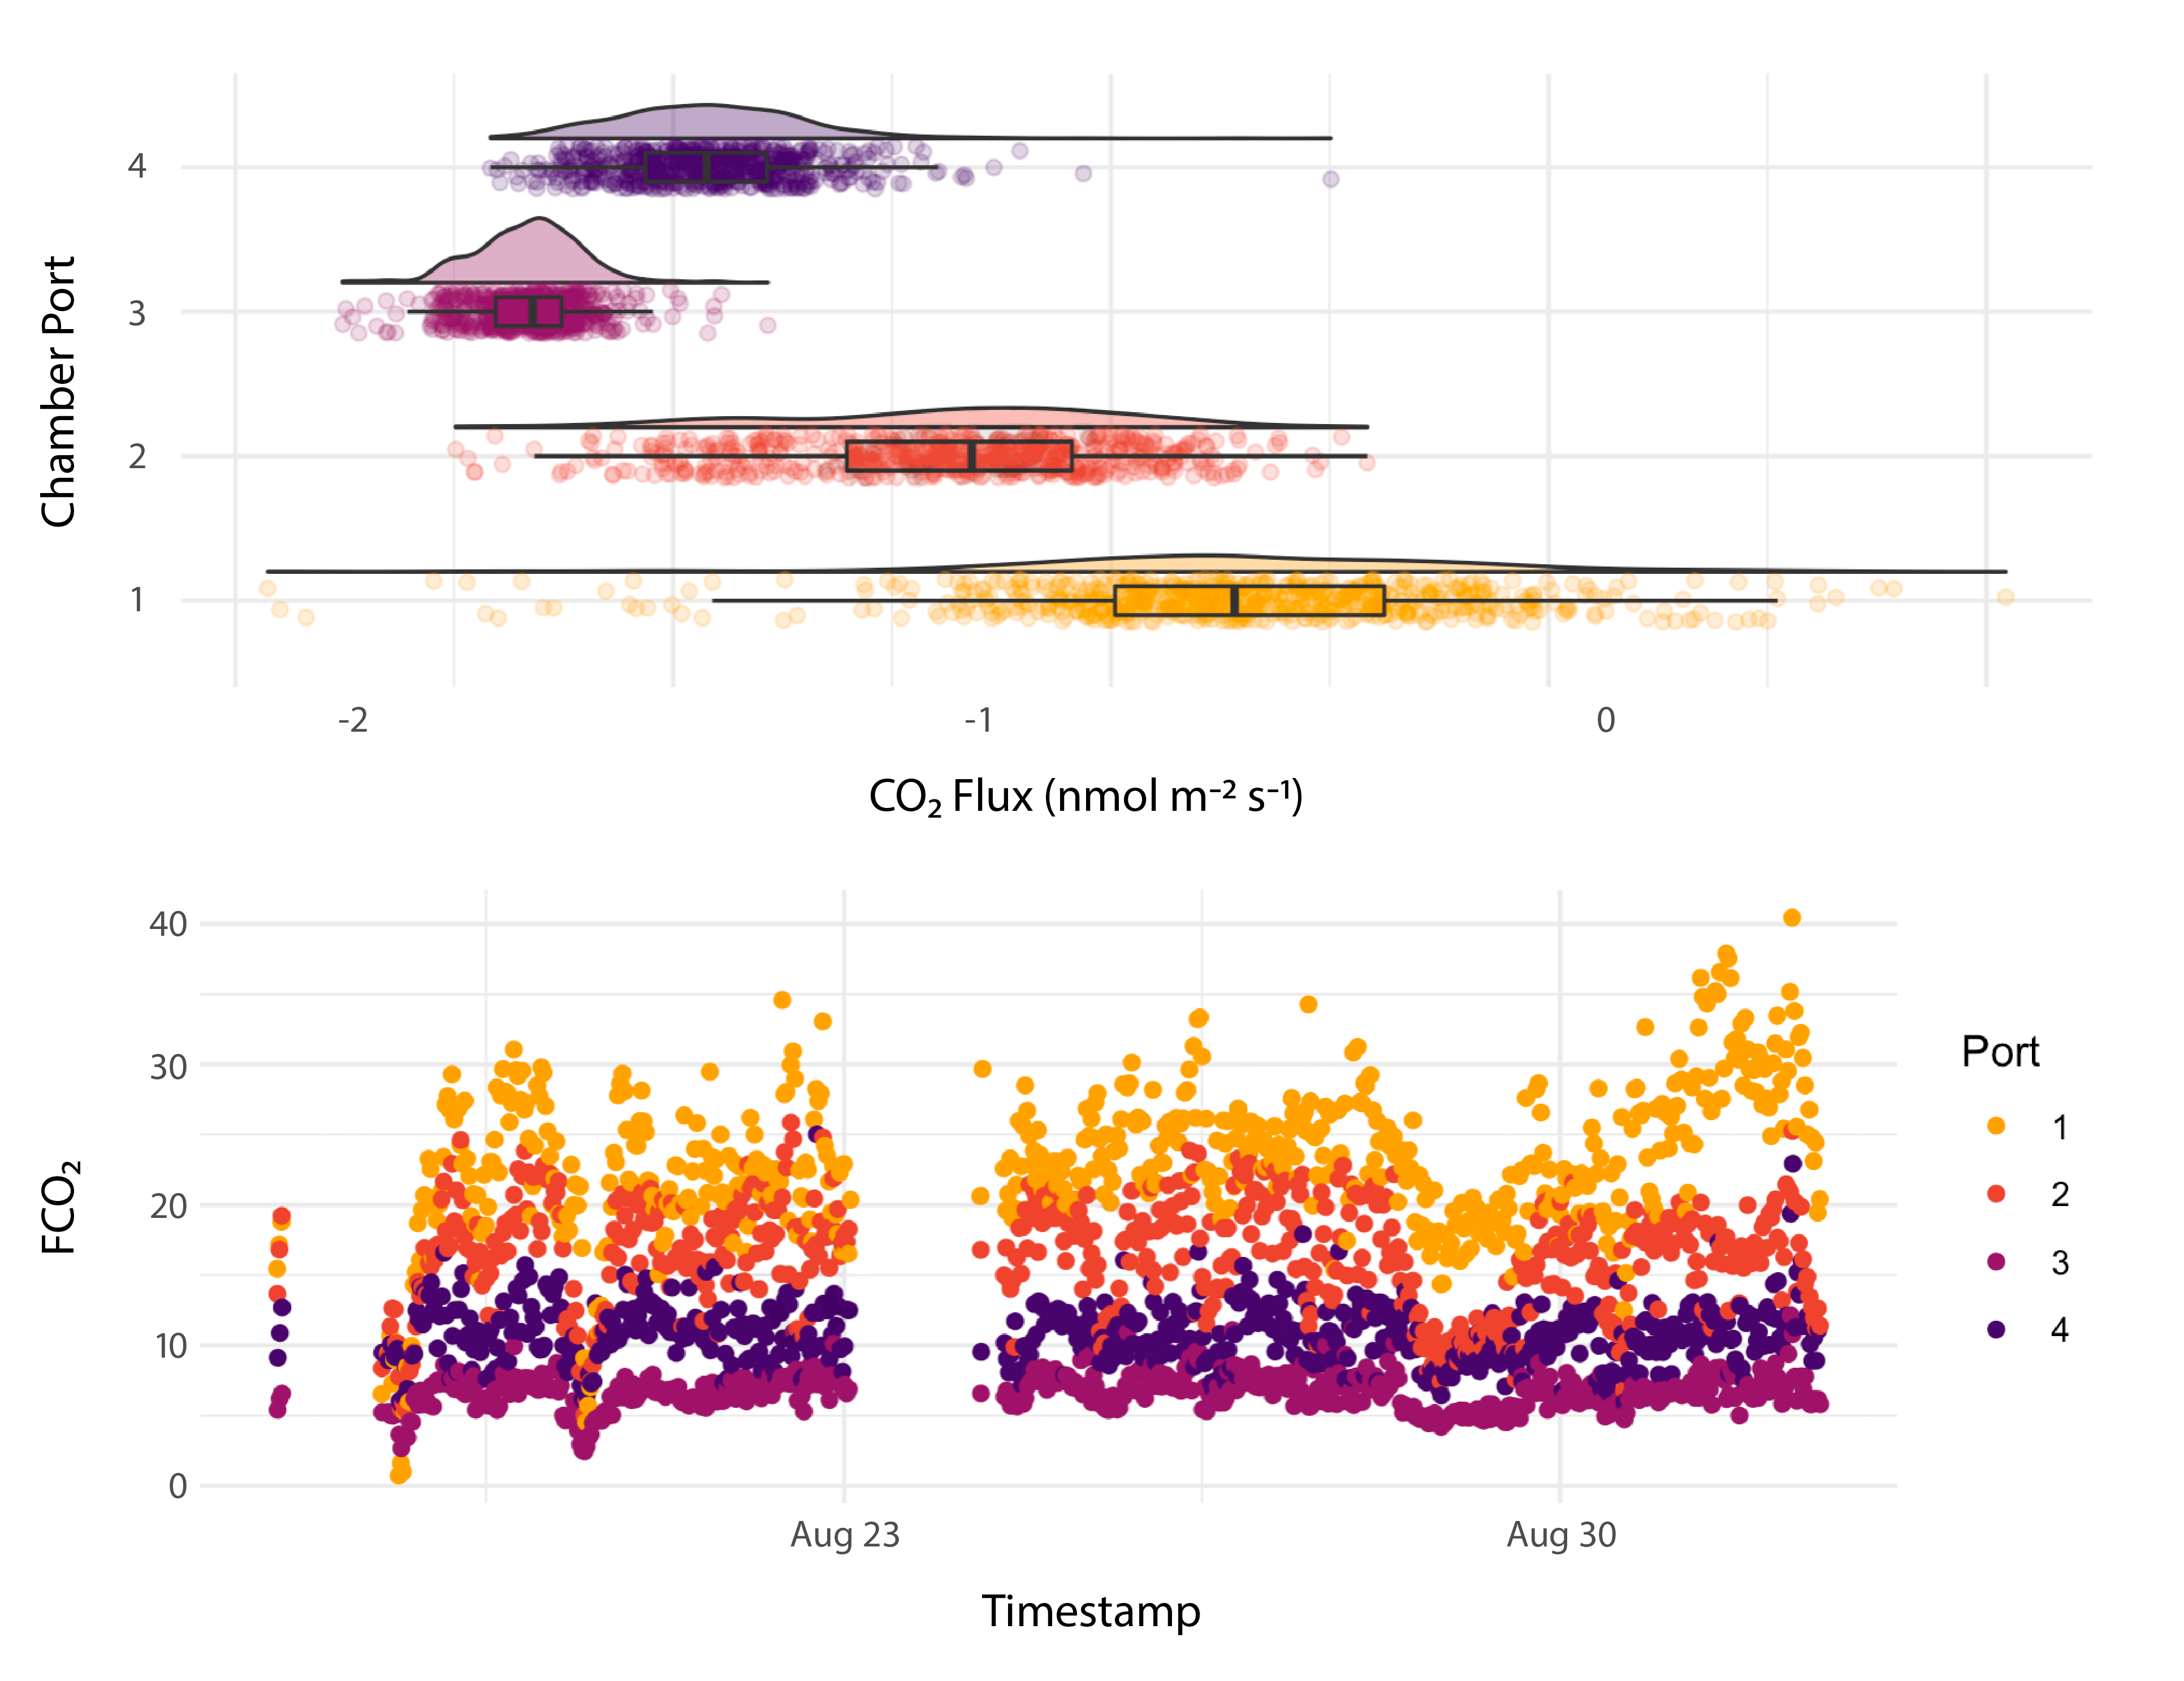 TEMPEST CO2 data